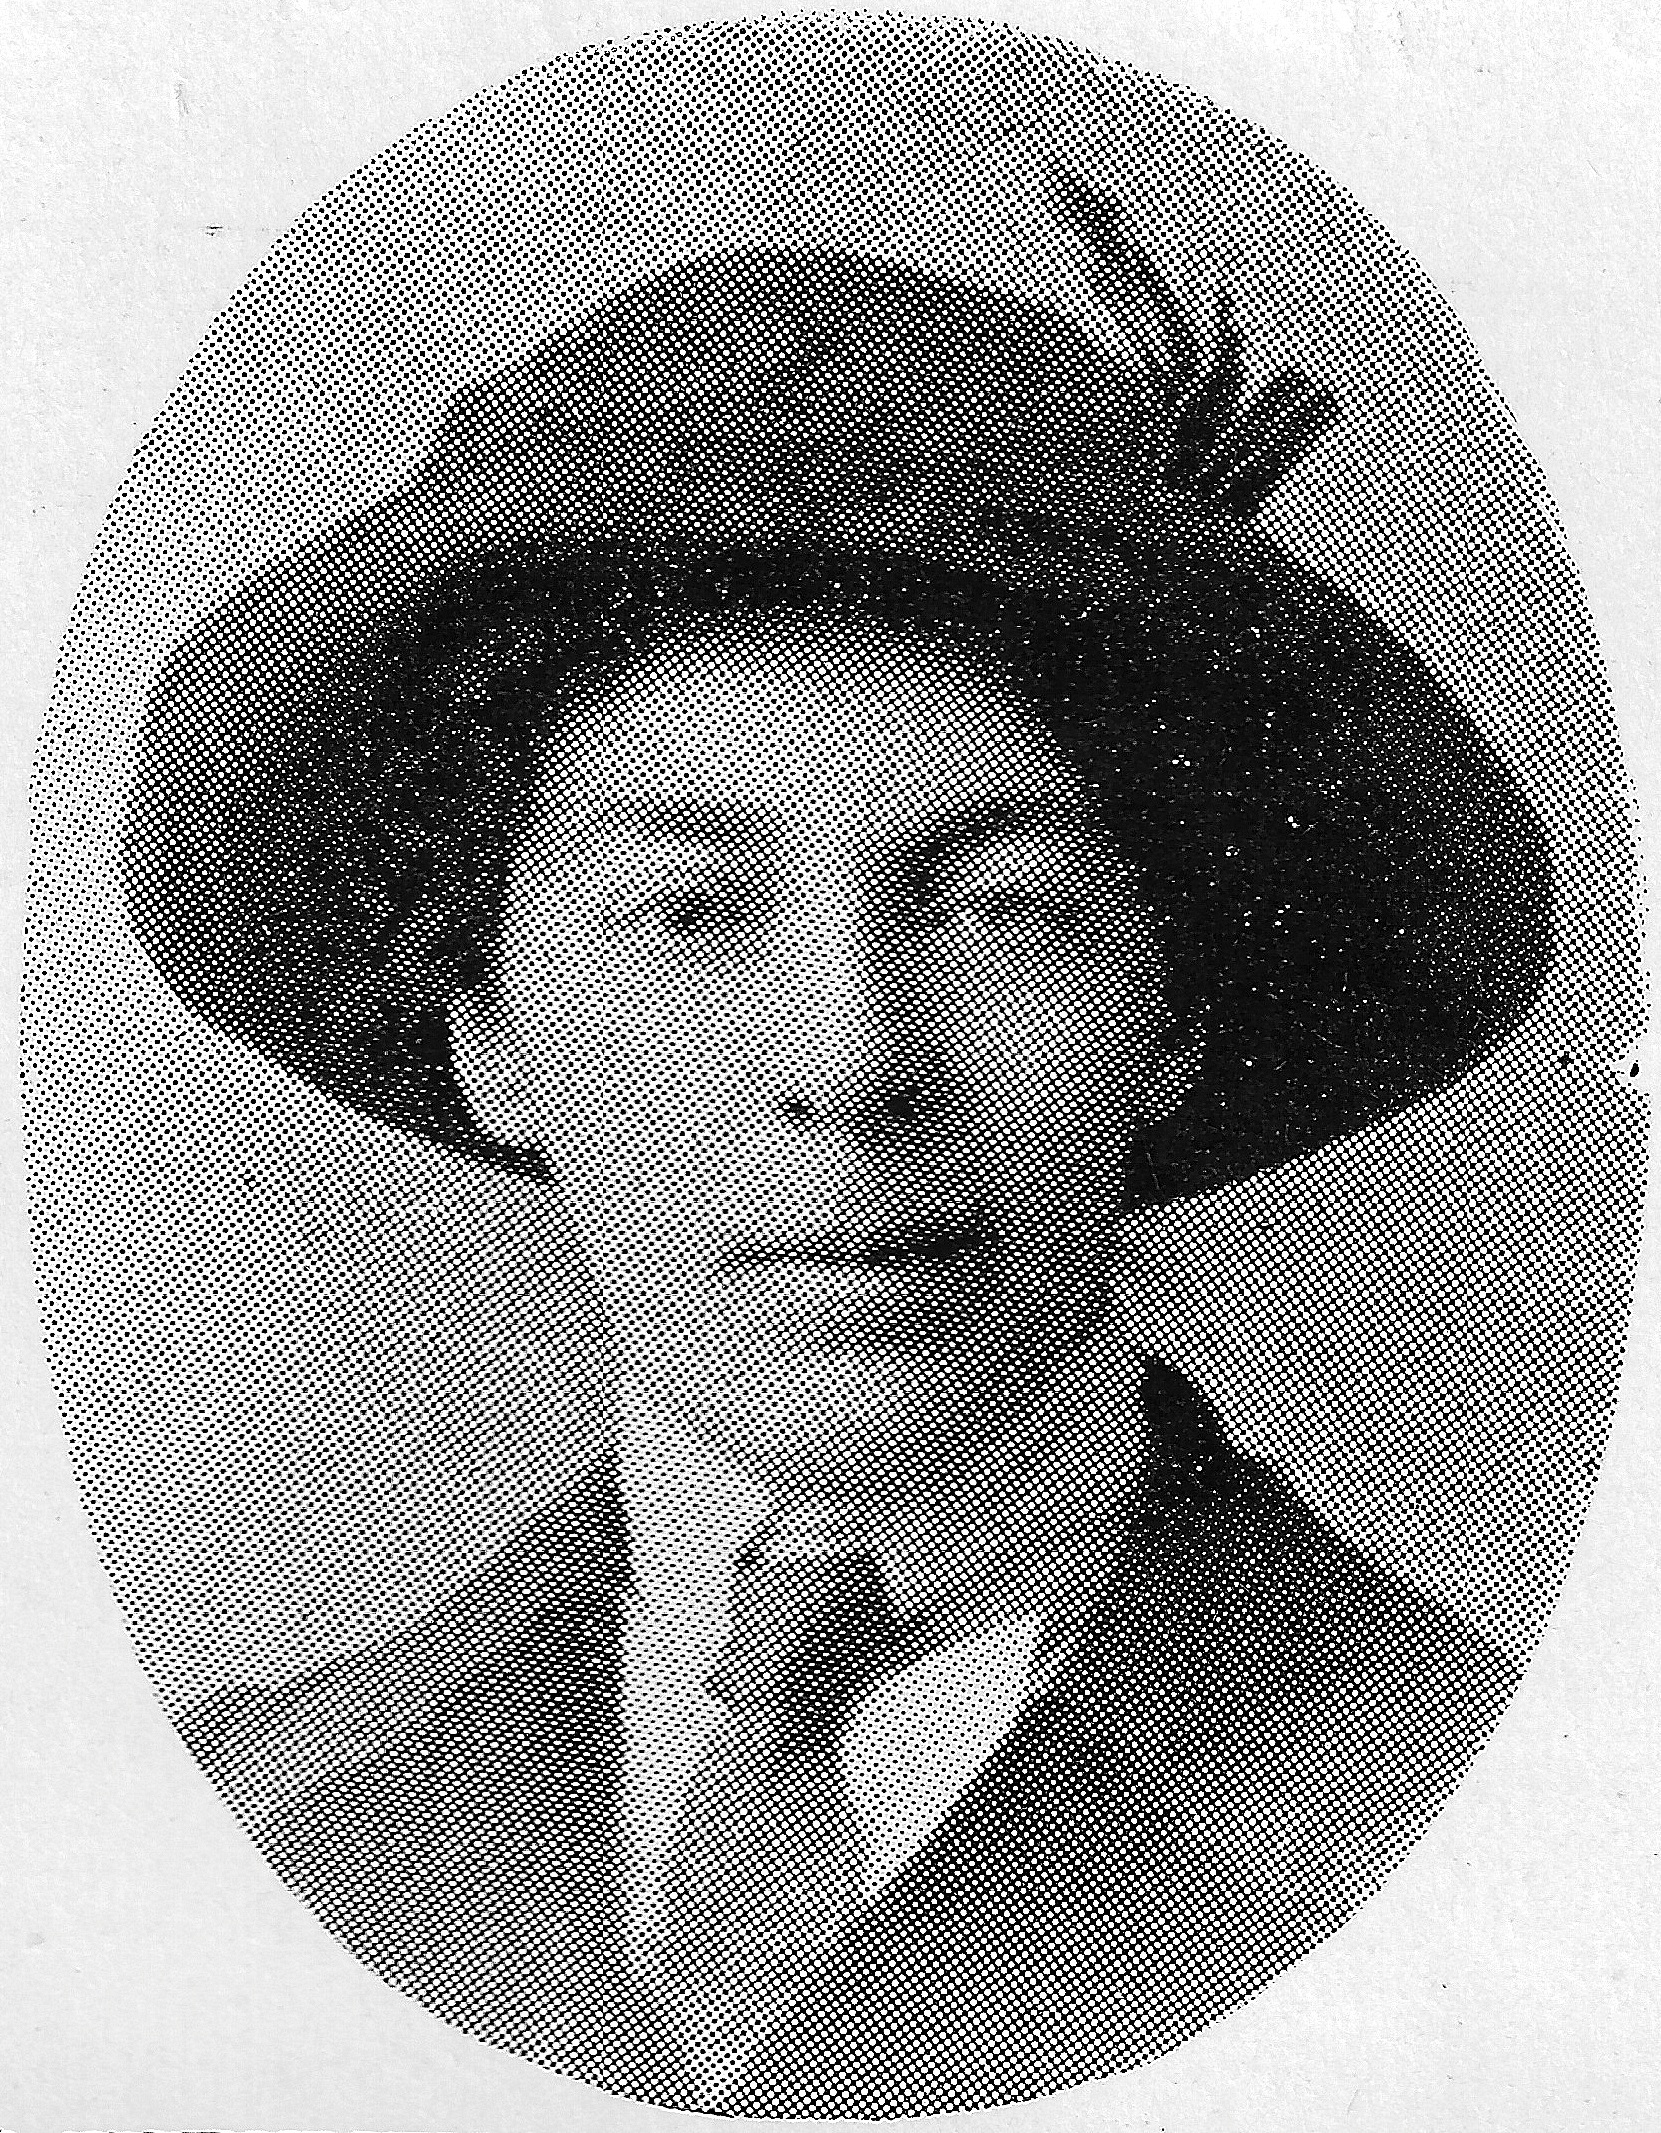 Elizabeth Fox Howard aged 40 in 1913